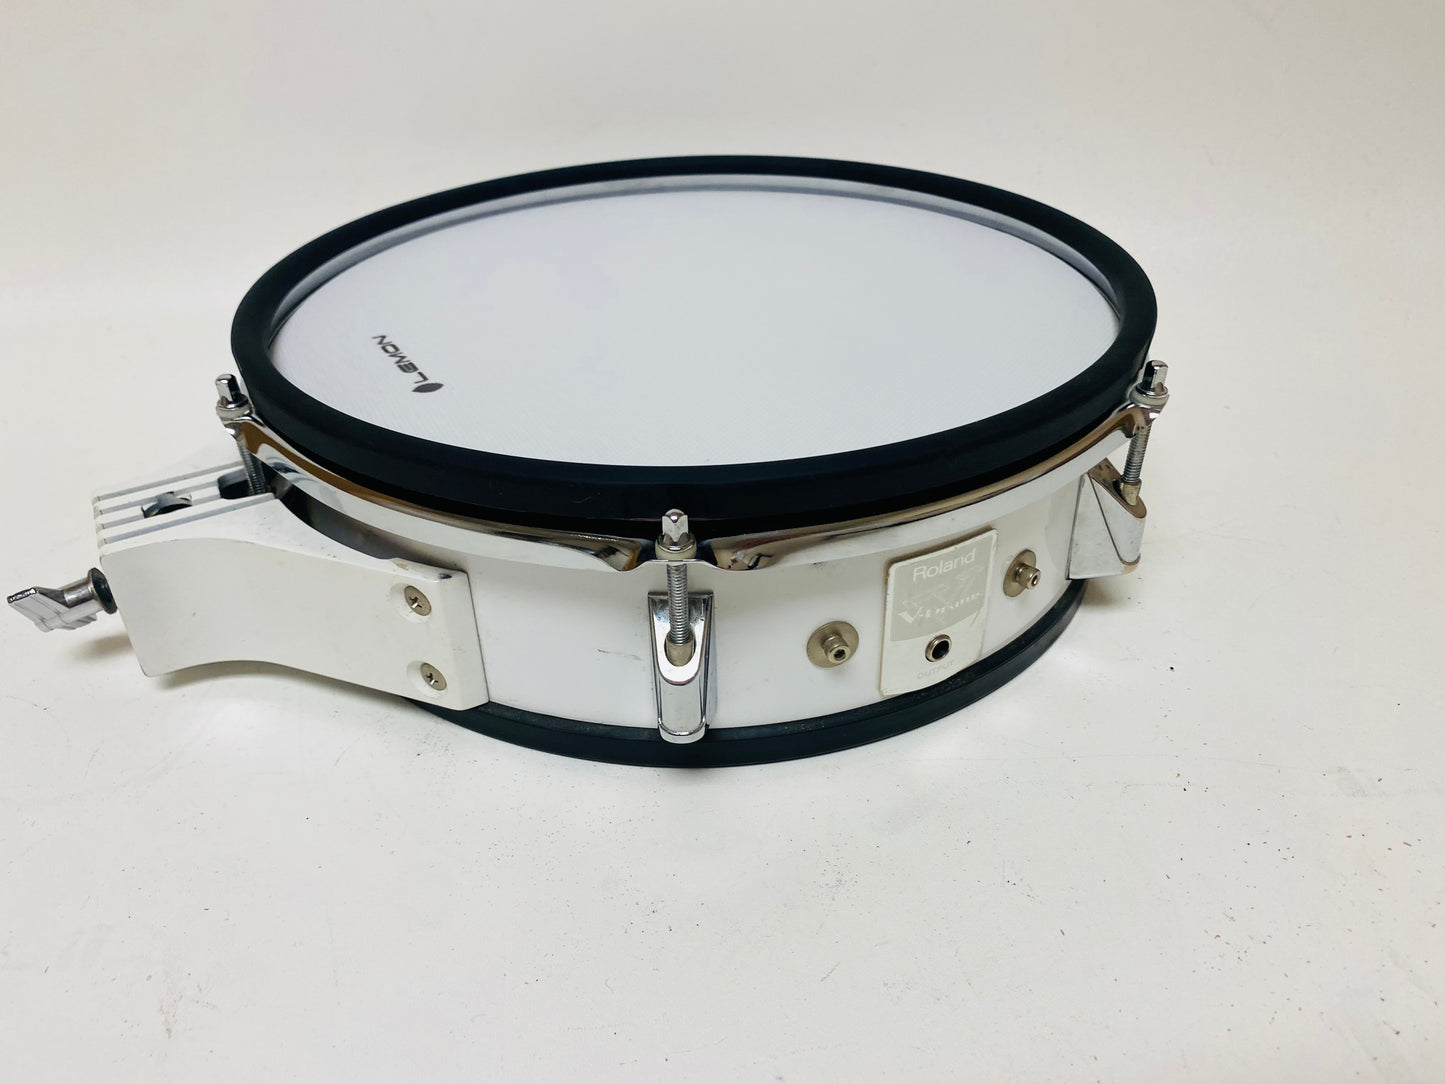 Roland PD-120 white drum pad